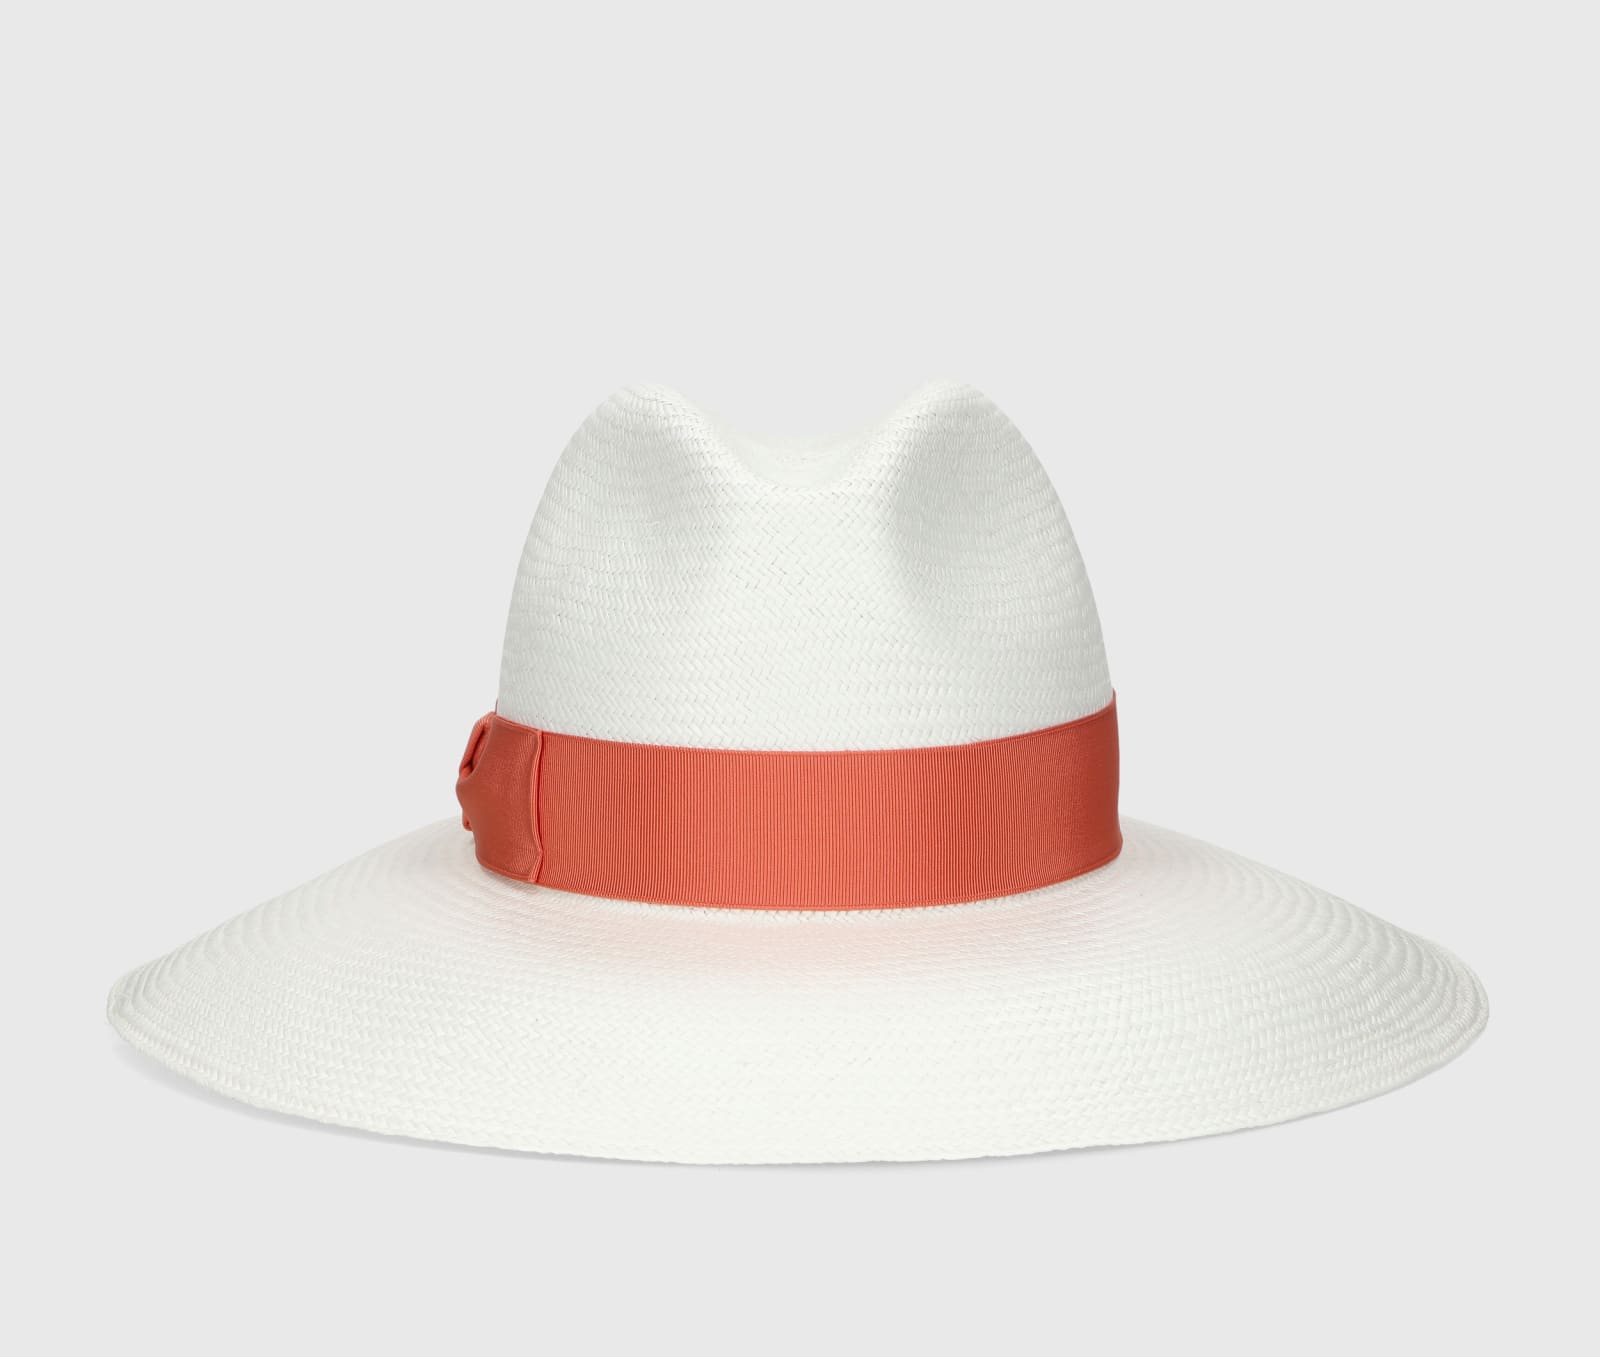 Shop Borsalino Sophie Panama Fine Wide Brim In White, Orange Hat Band